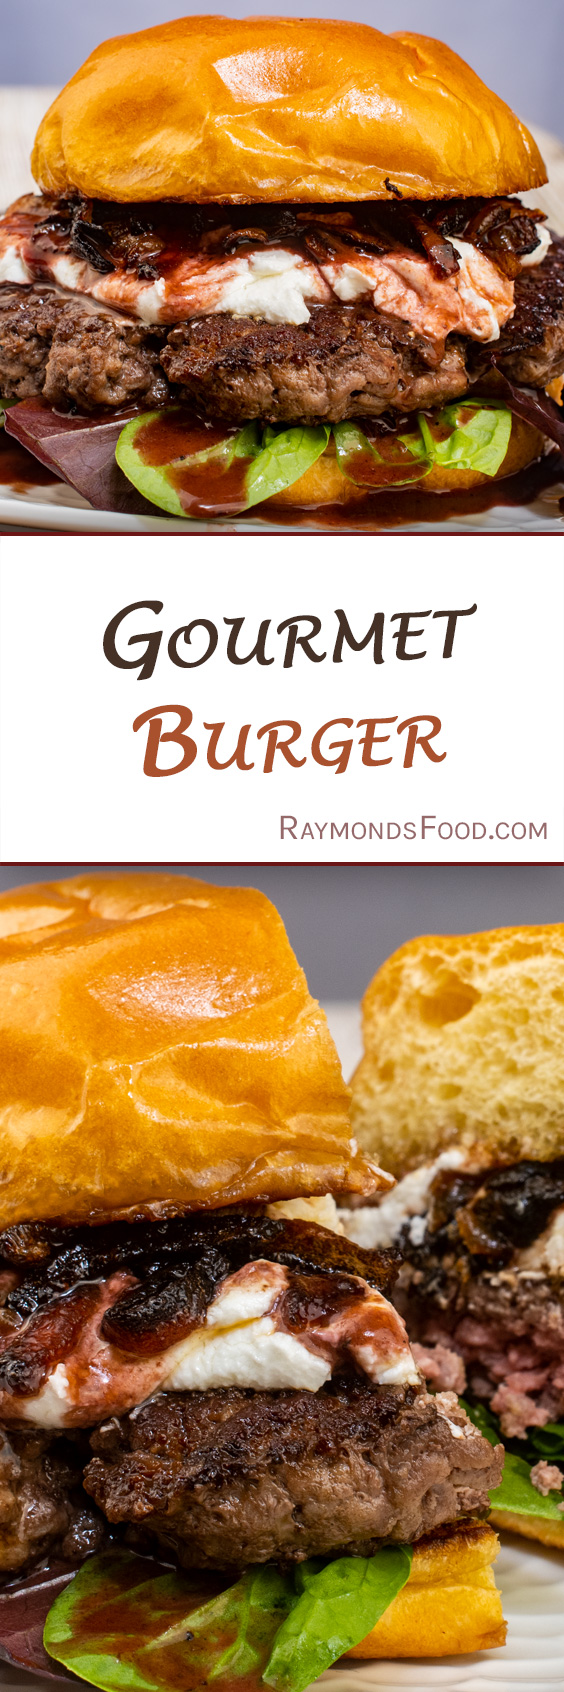 Raymond's Food | Gourmet Burger